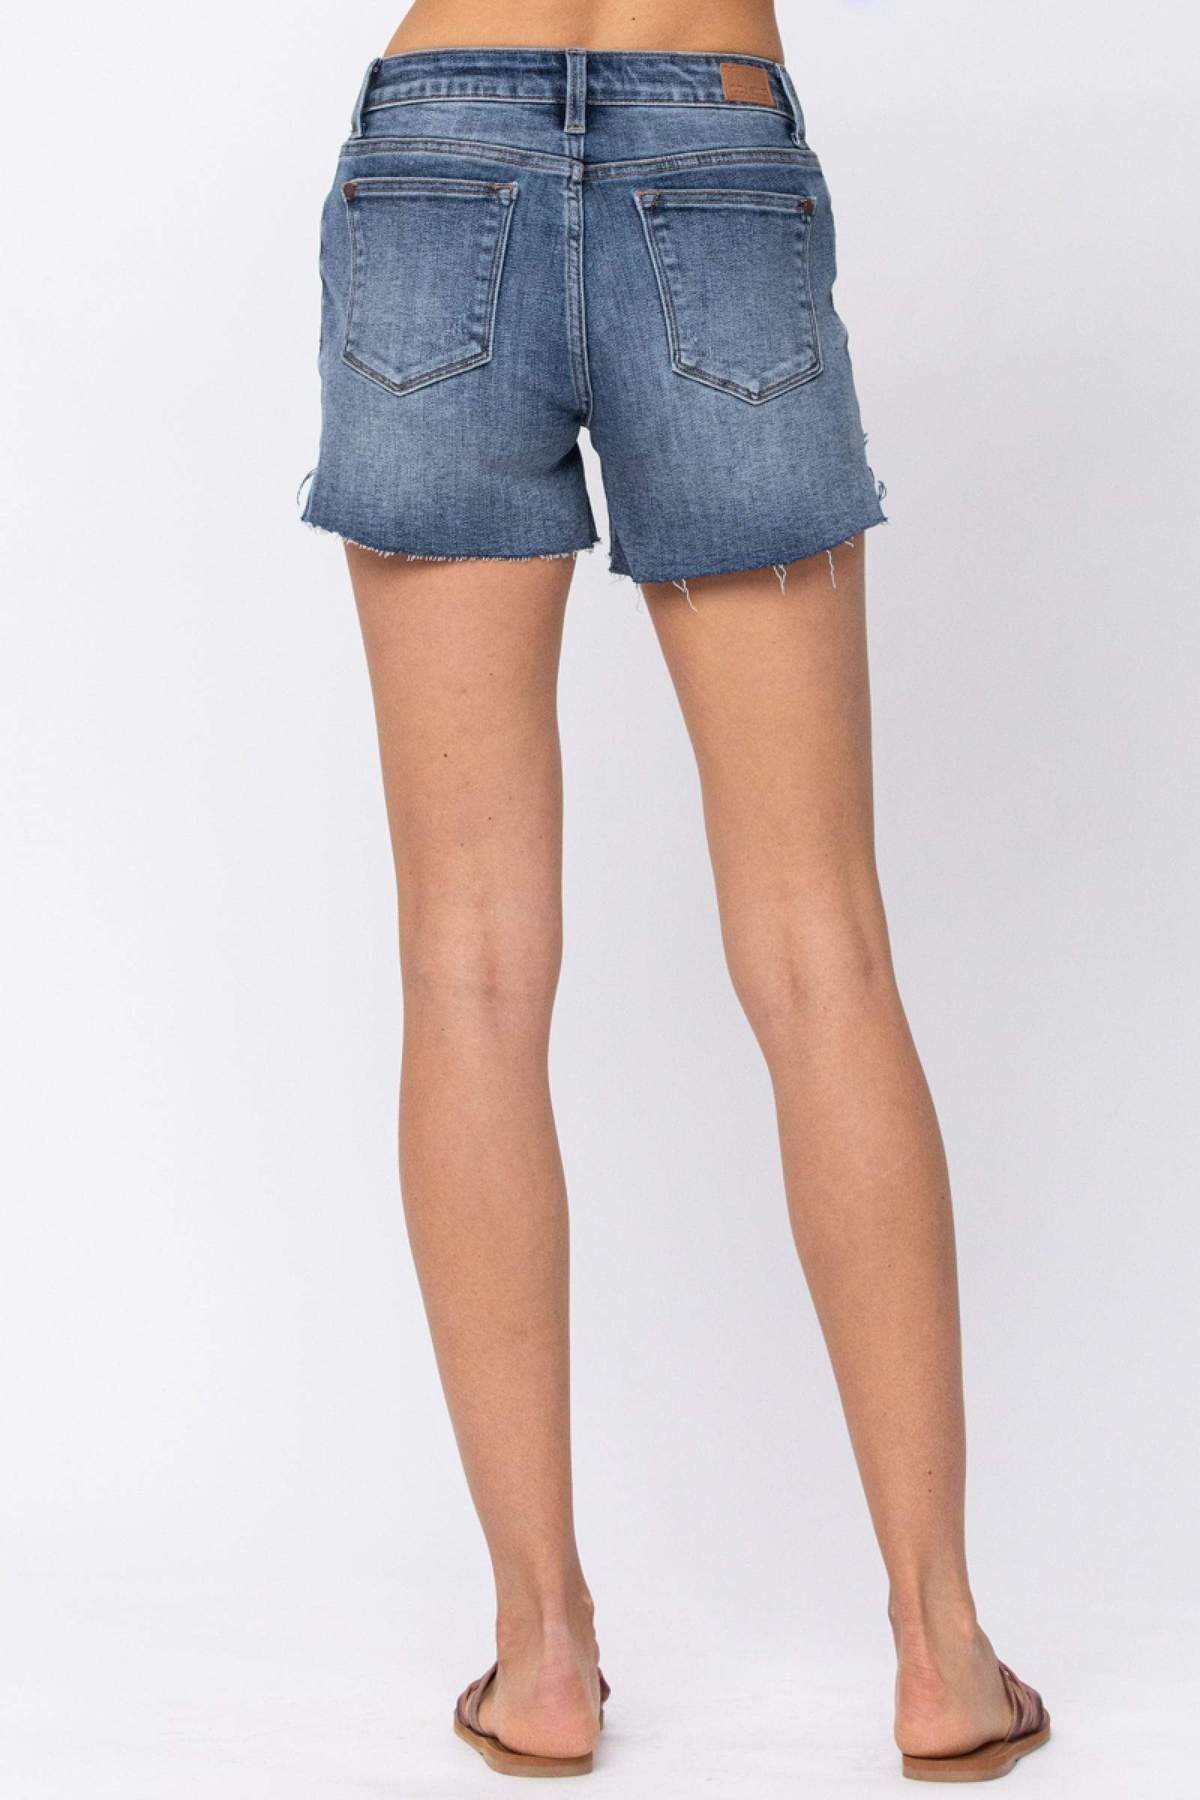 [Judy Blue] Mid-Rise Half Cuffed Shorts